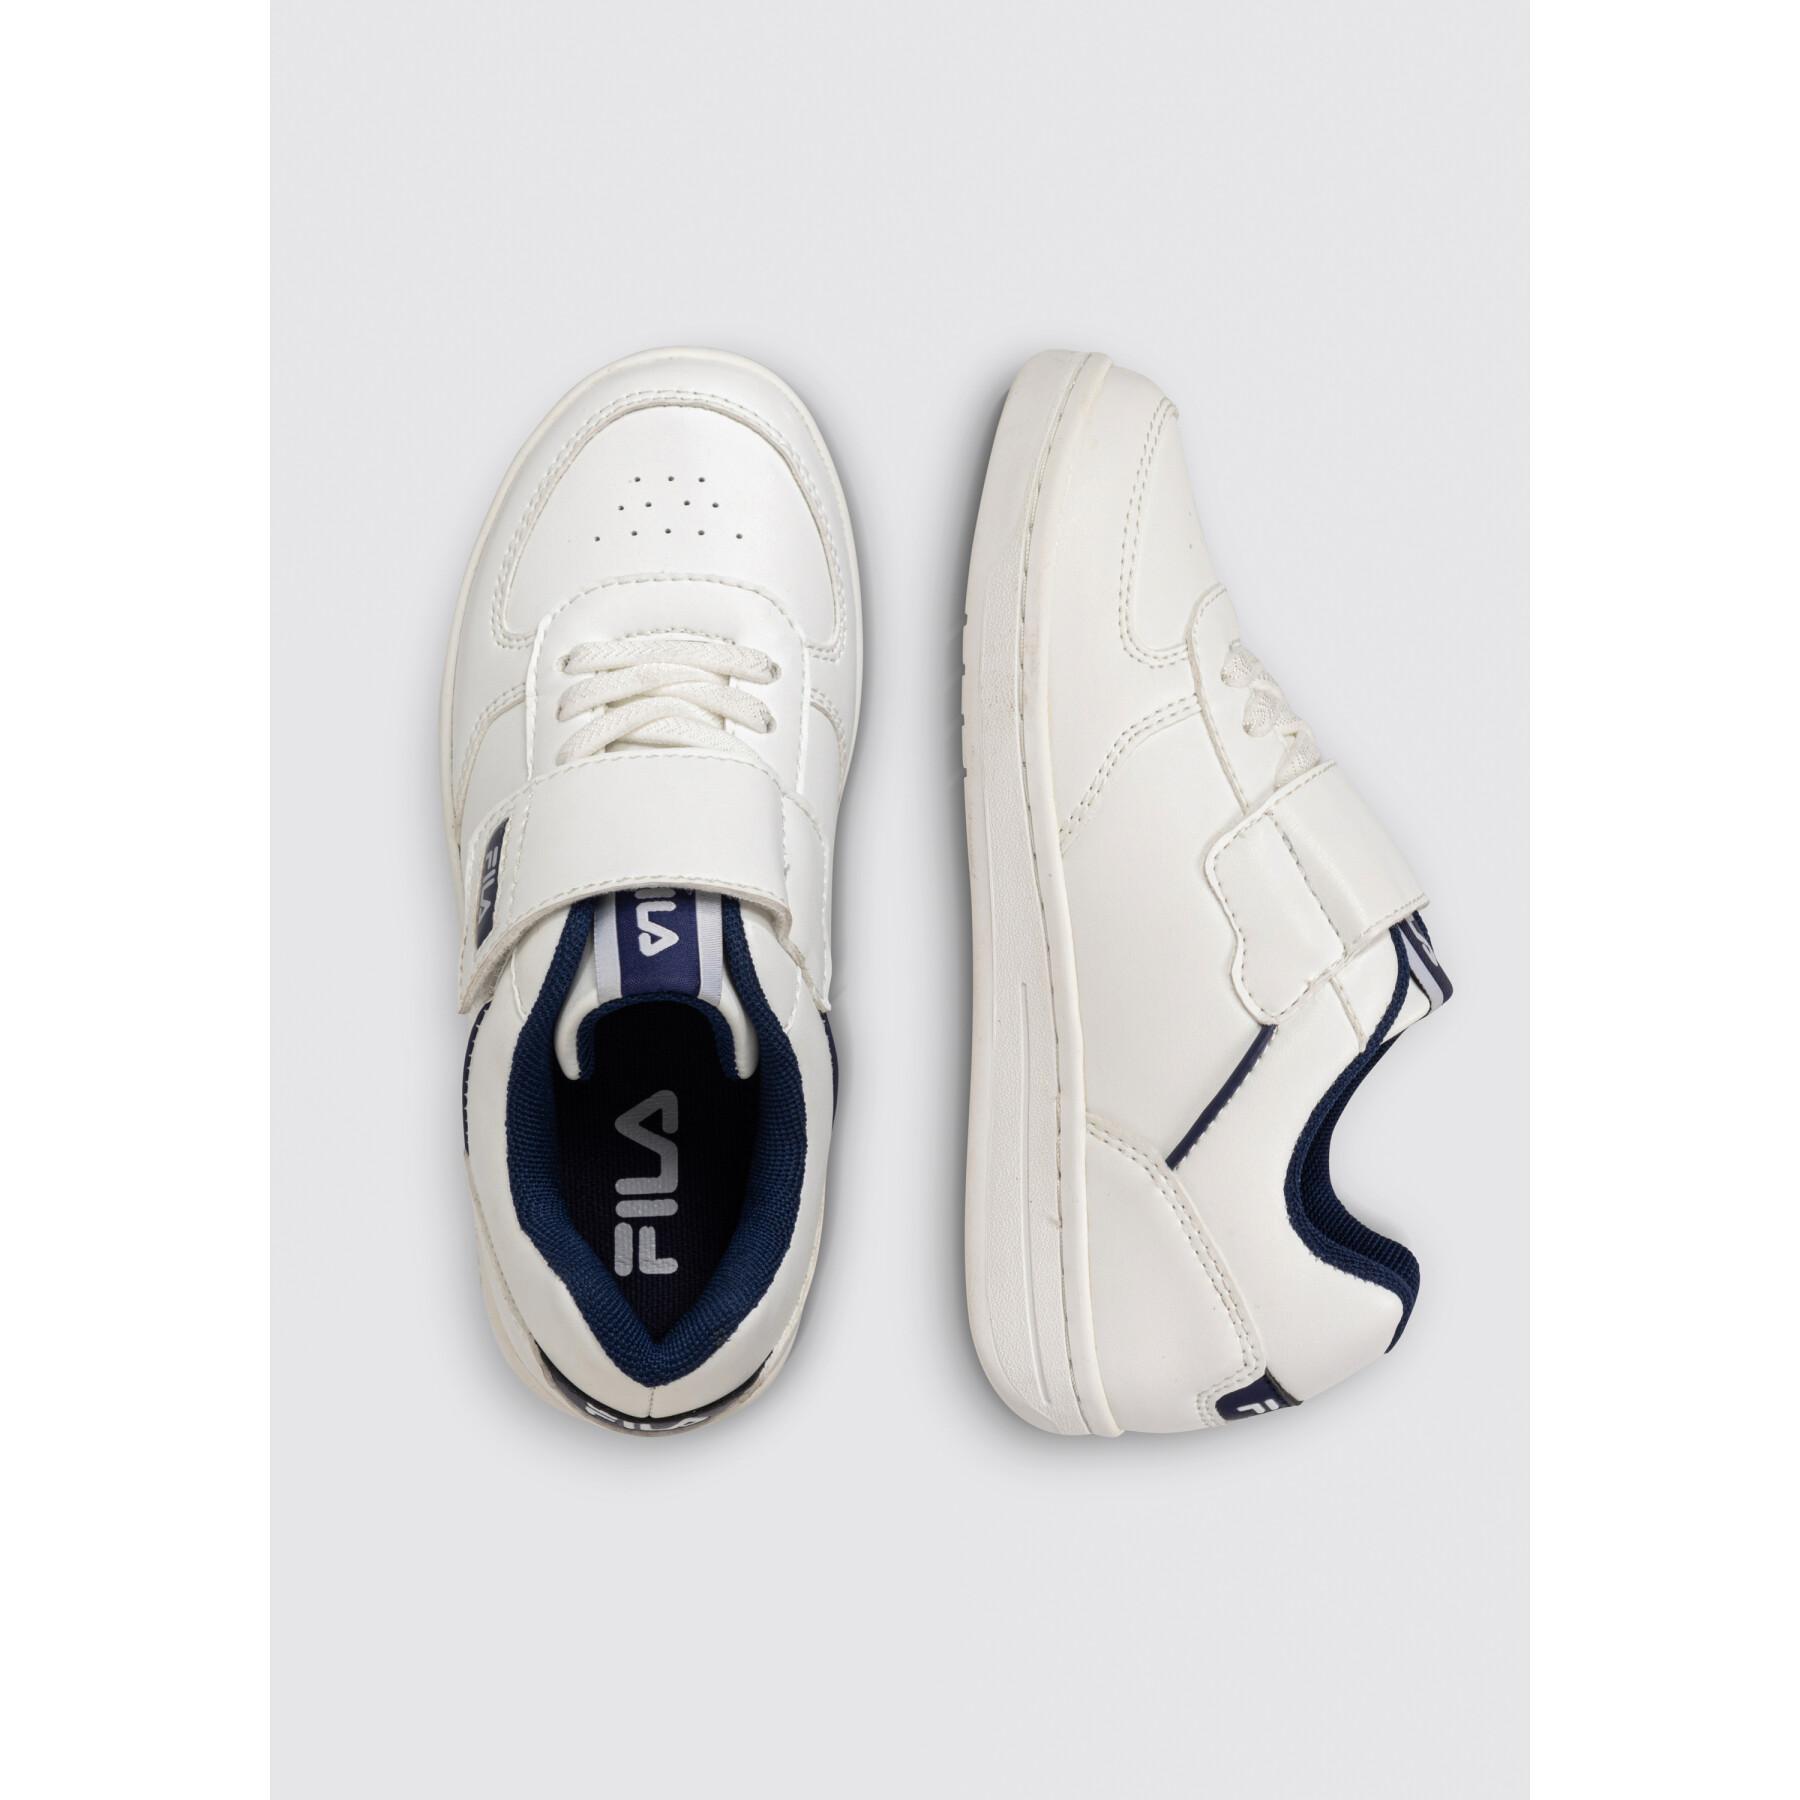 - C.Court for Brands kids Velcro sneakers - Fila Sneakers